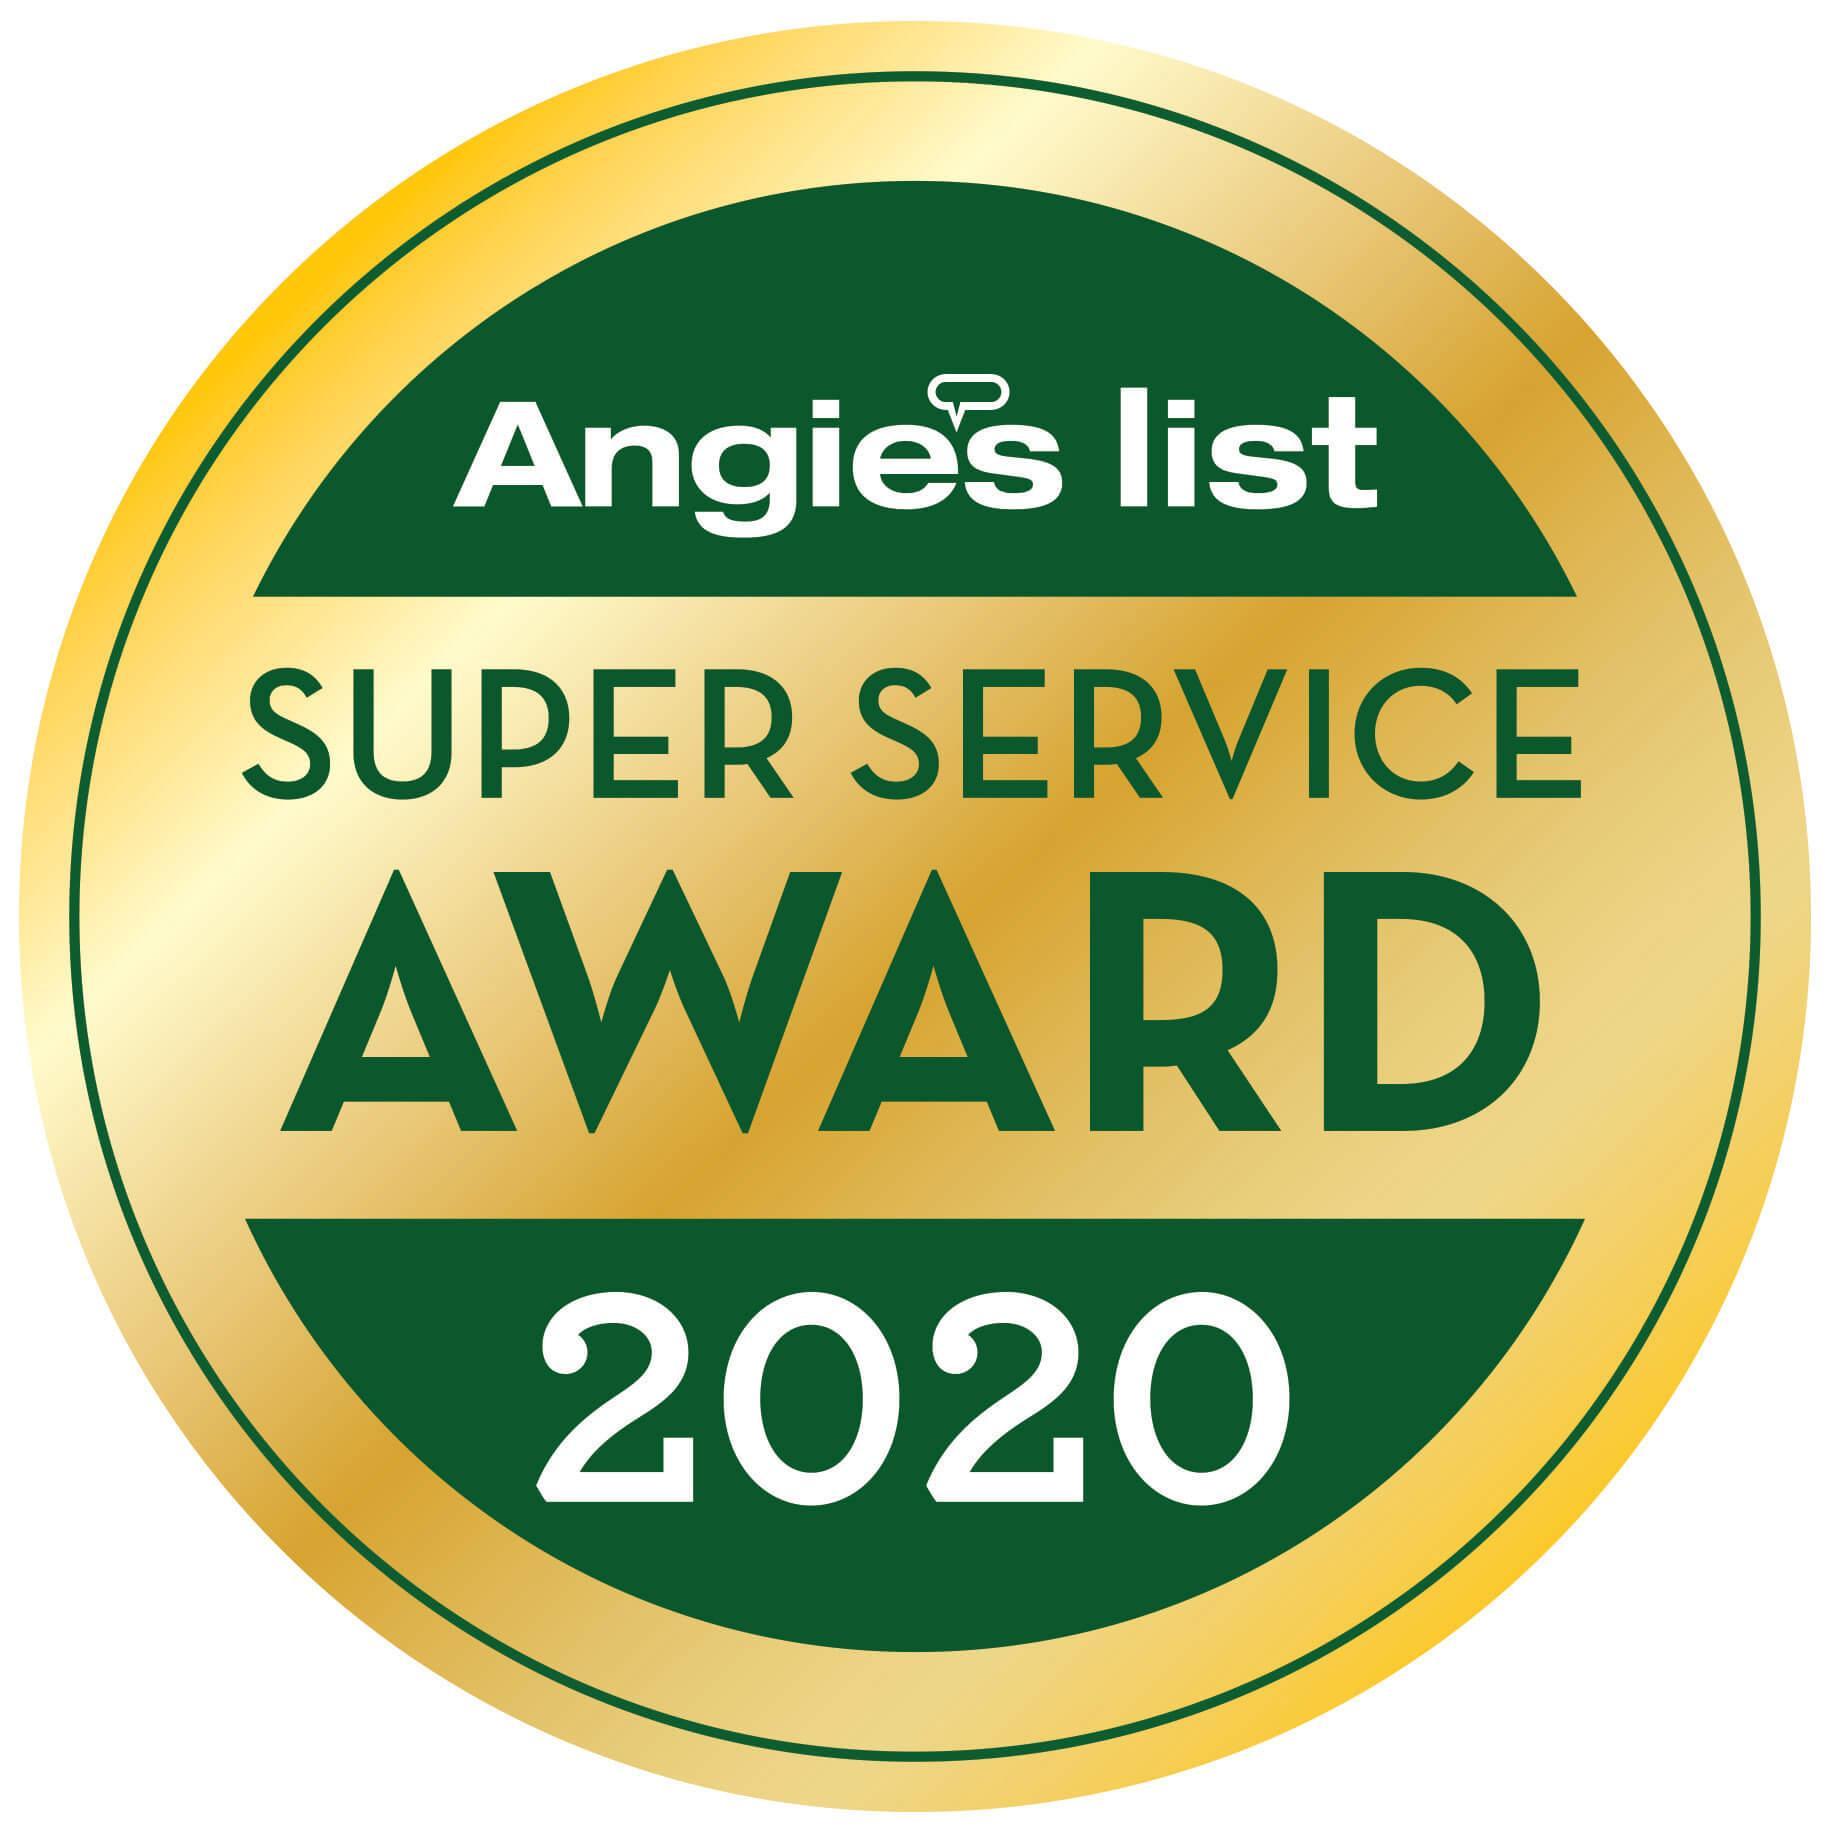 angies-list-super-service-award-winner-in-Doylestown